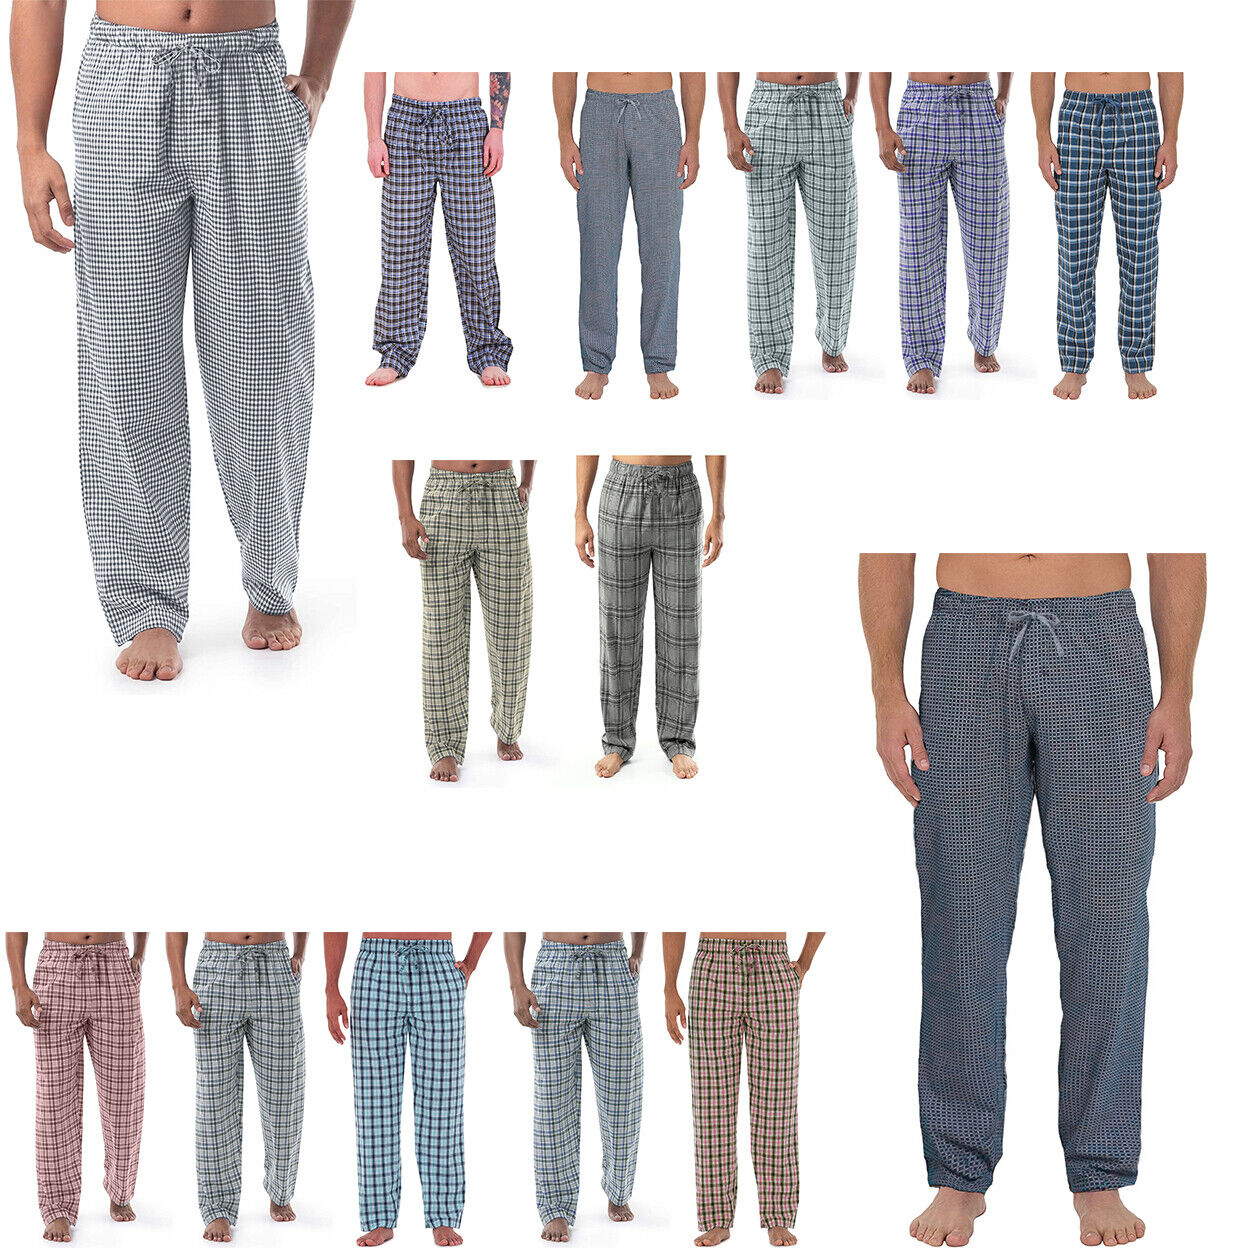 3-Pack: Men's Ultra-Soft Solid & Plaid Cotton Jersey Knit Comfy Sleep Lounge Pajama Pants - Plaid, X-large